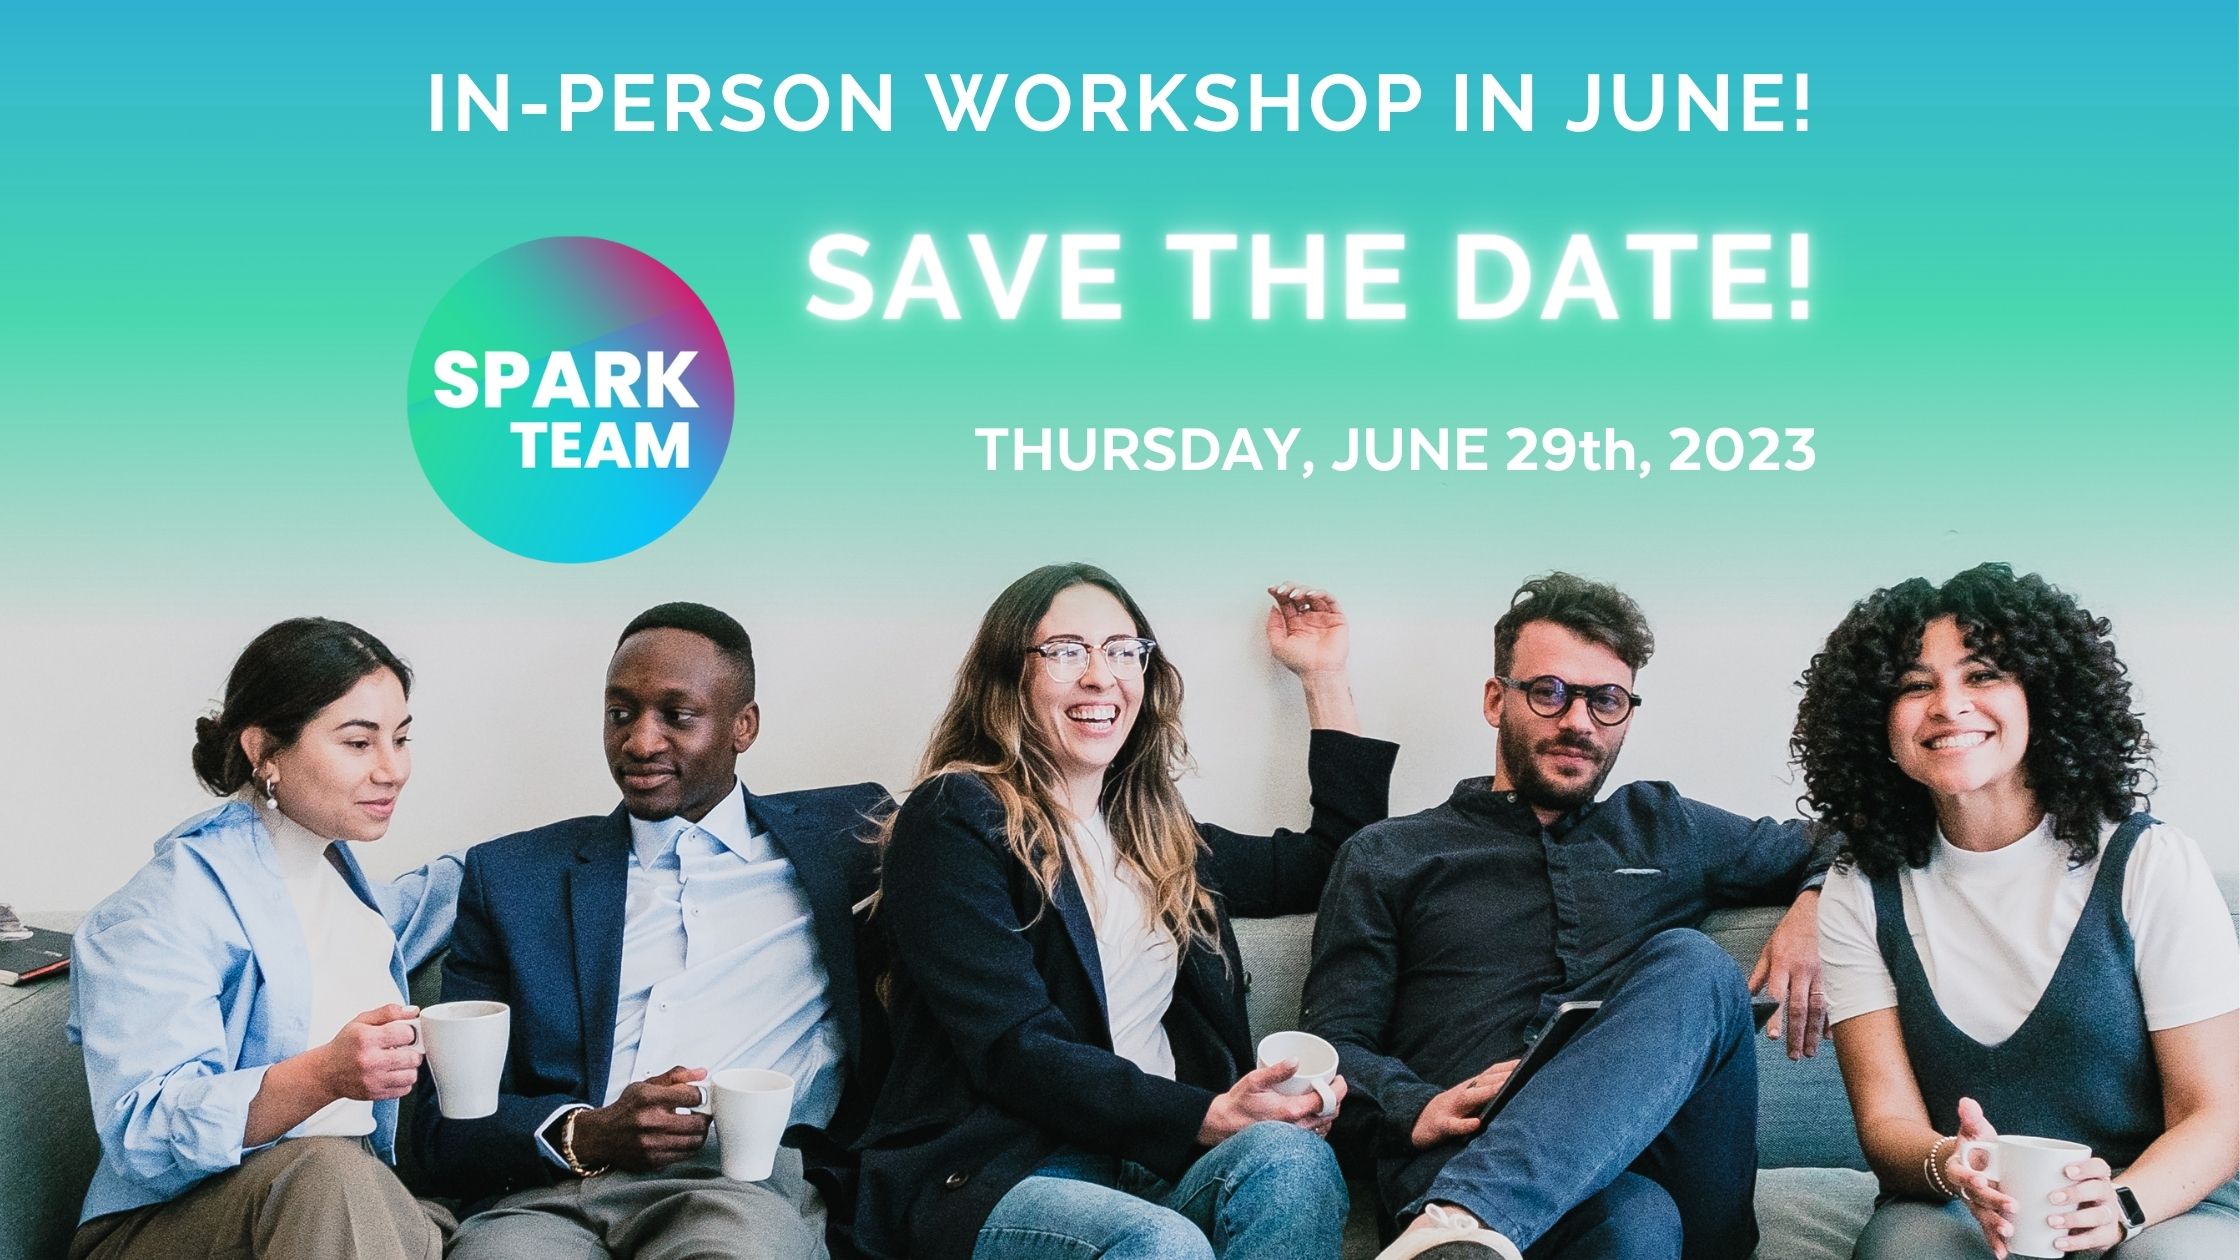 SPARK! In-Person Workshop in June!